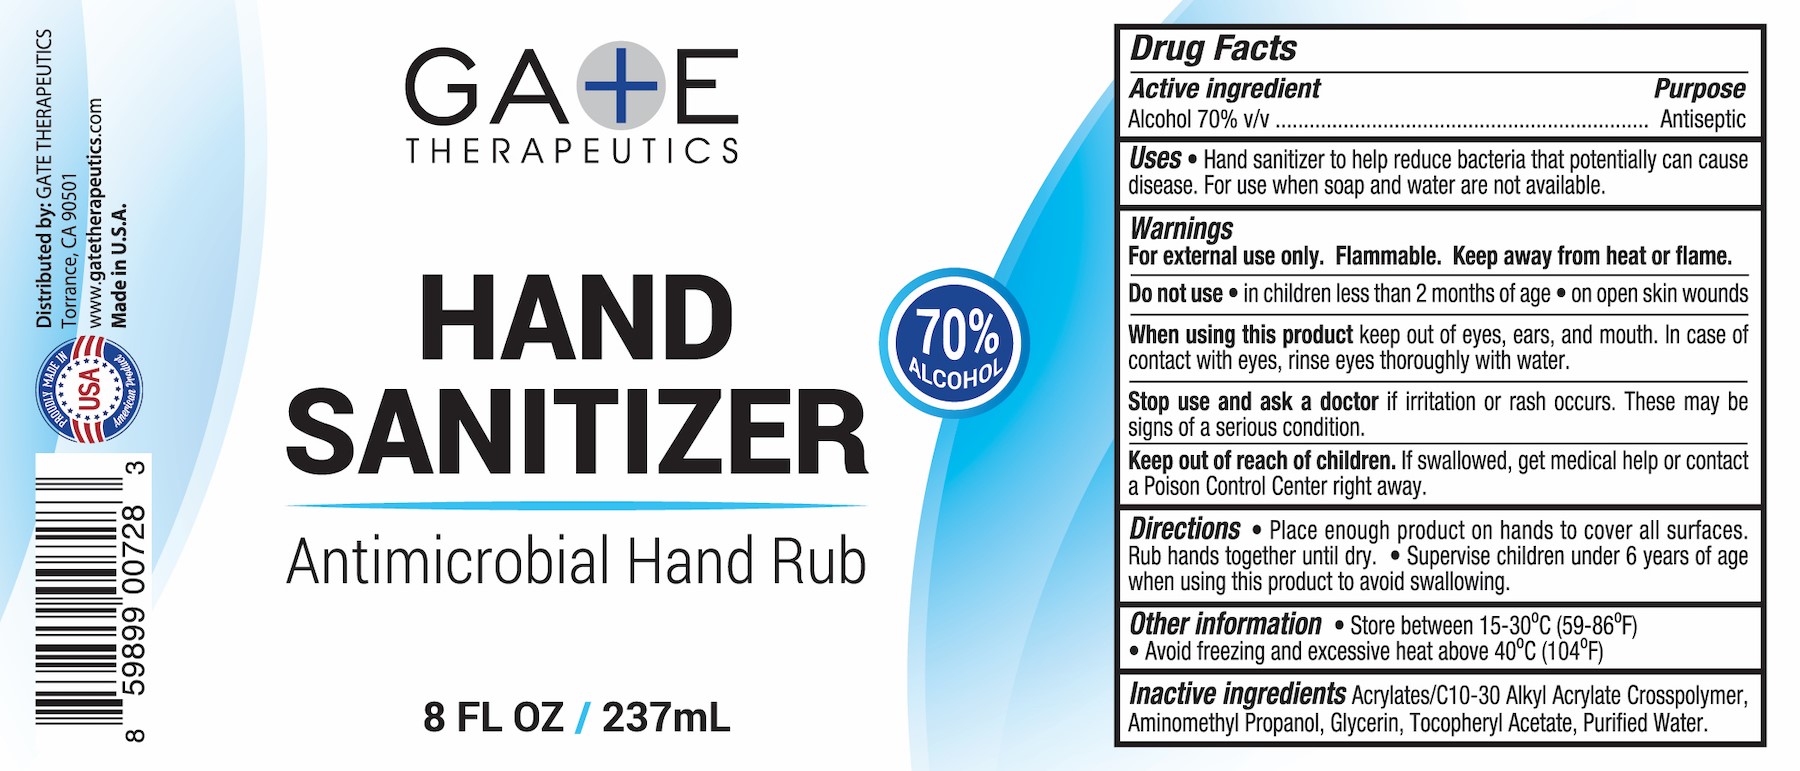 Gate Hand Sanitizer Label